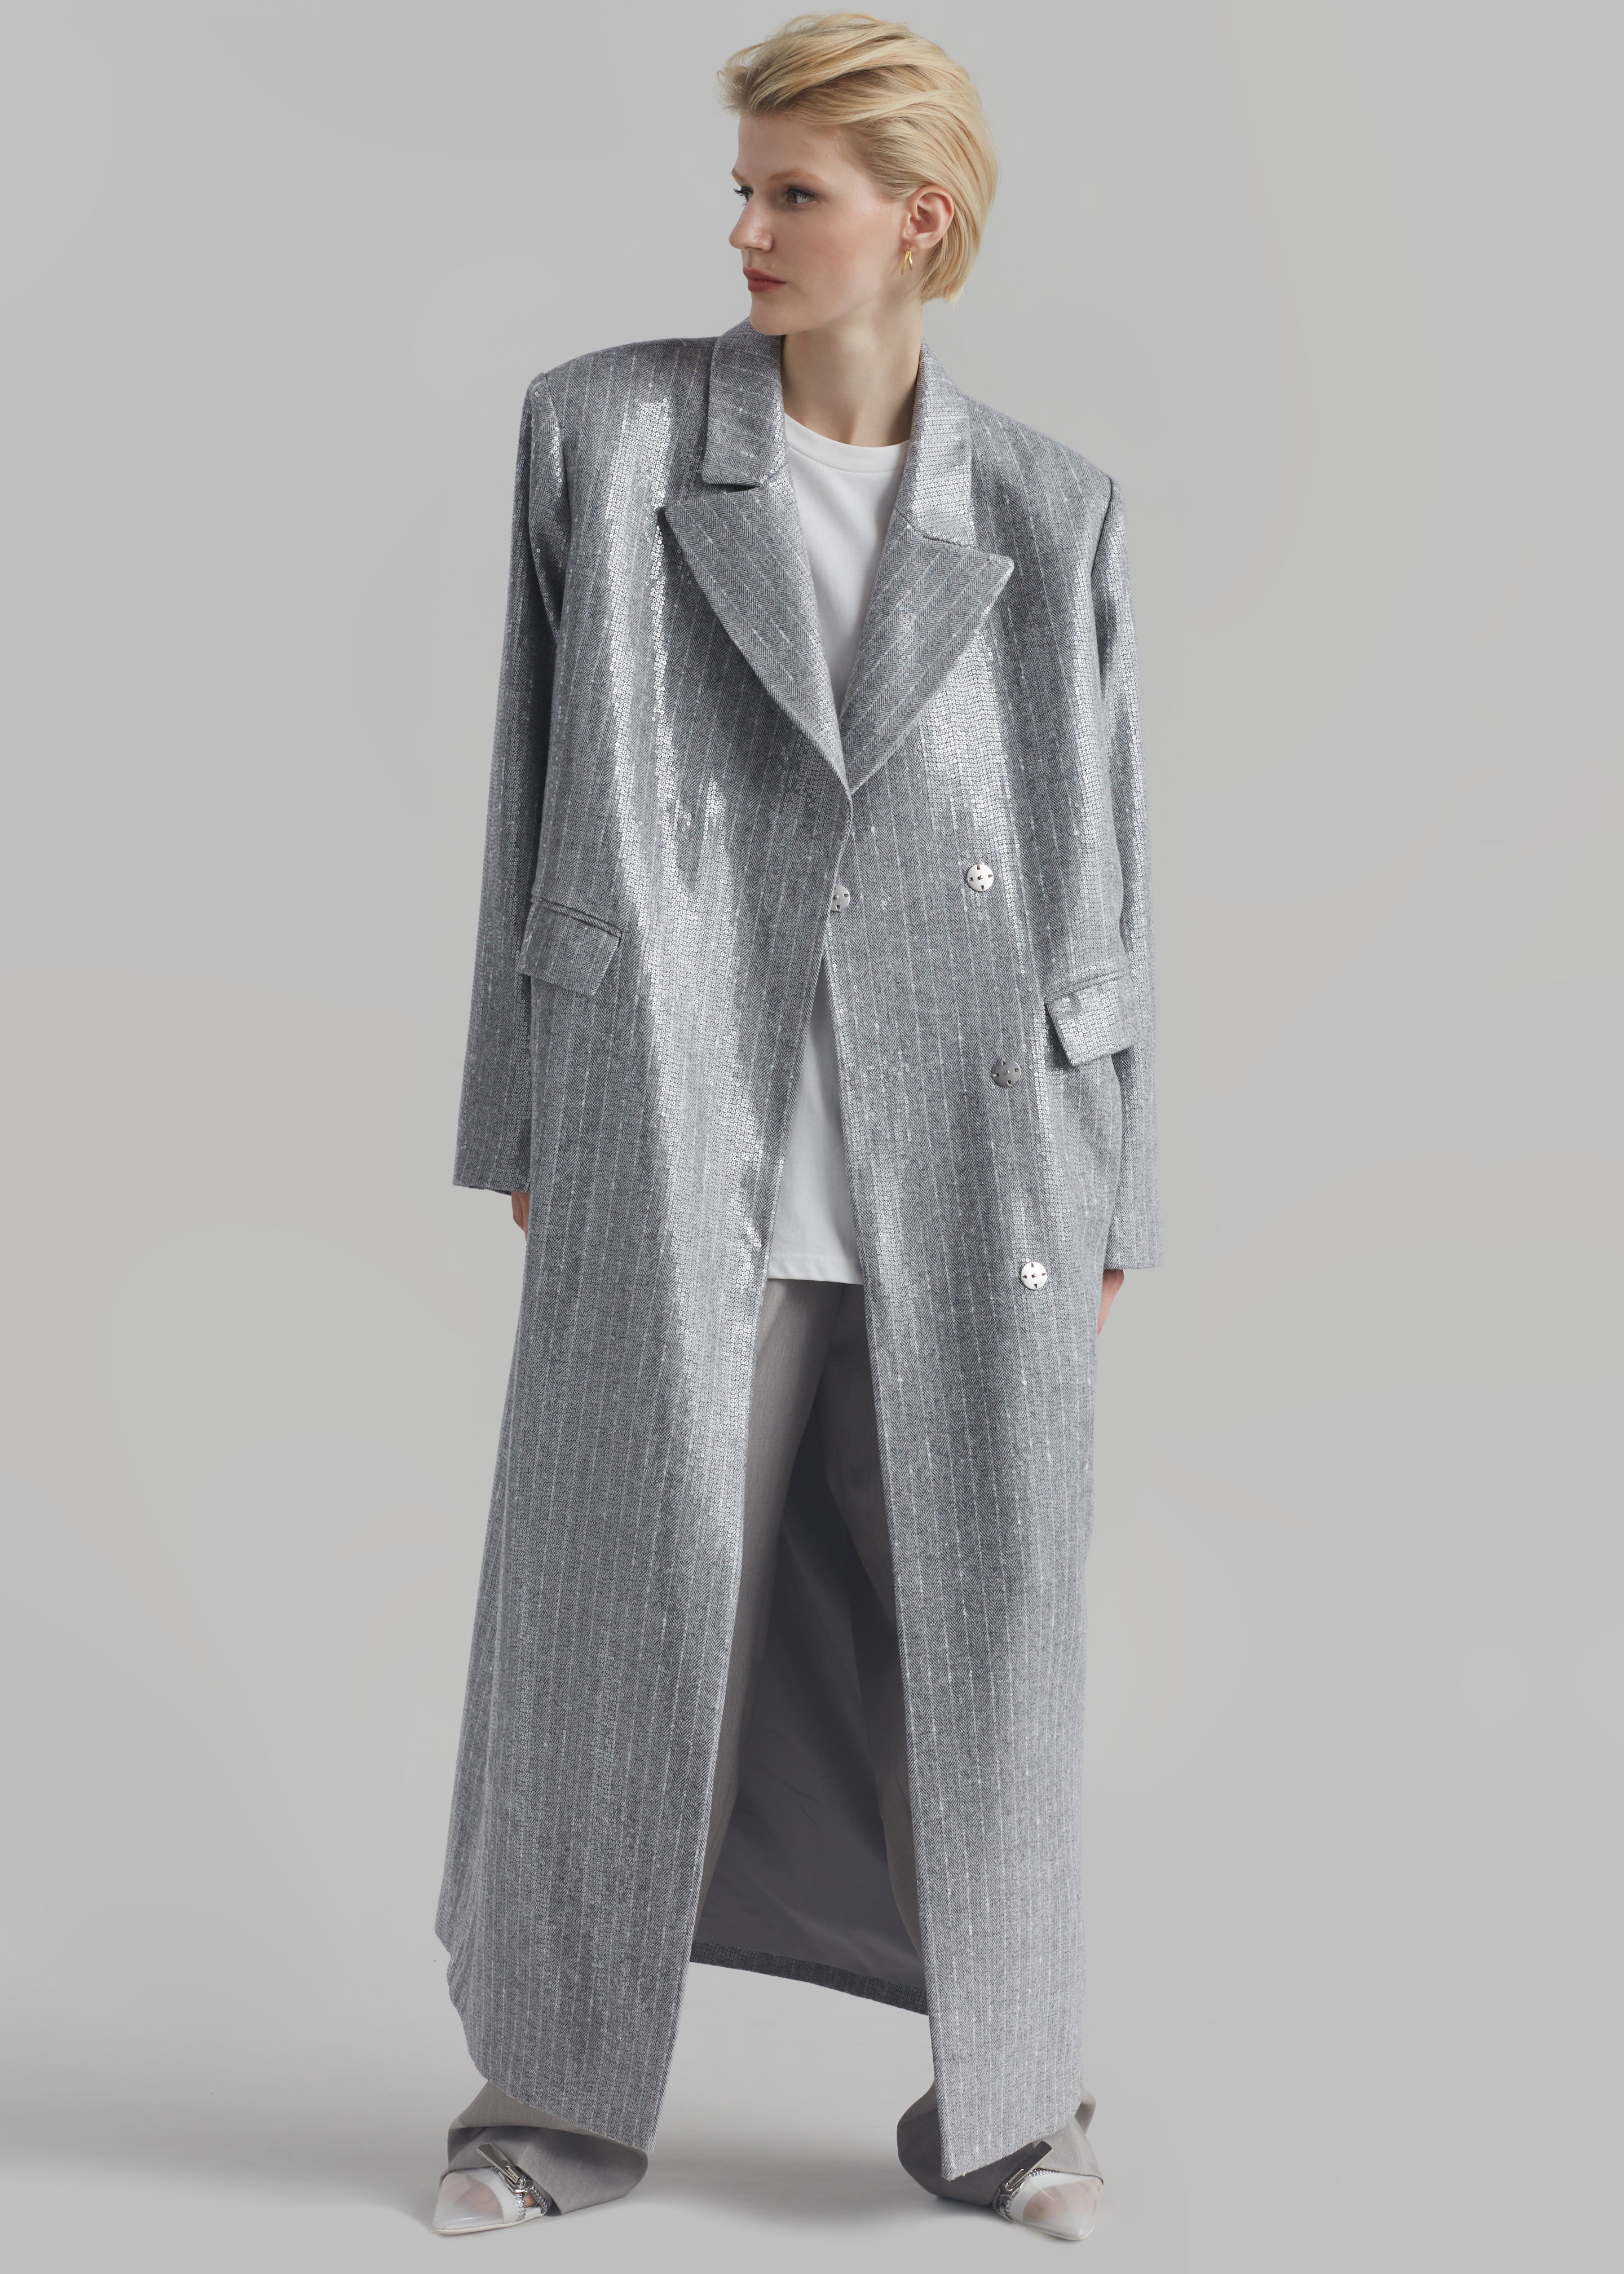 Jennifer Sequins Coat - Grey/White Stripe - 5